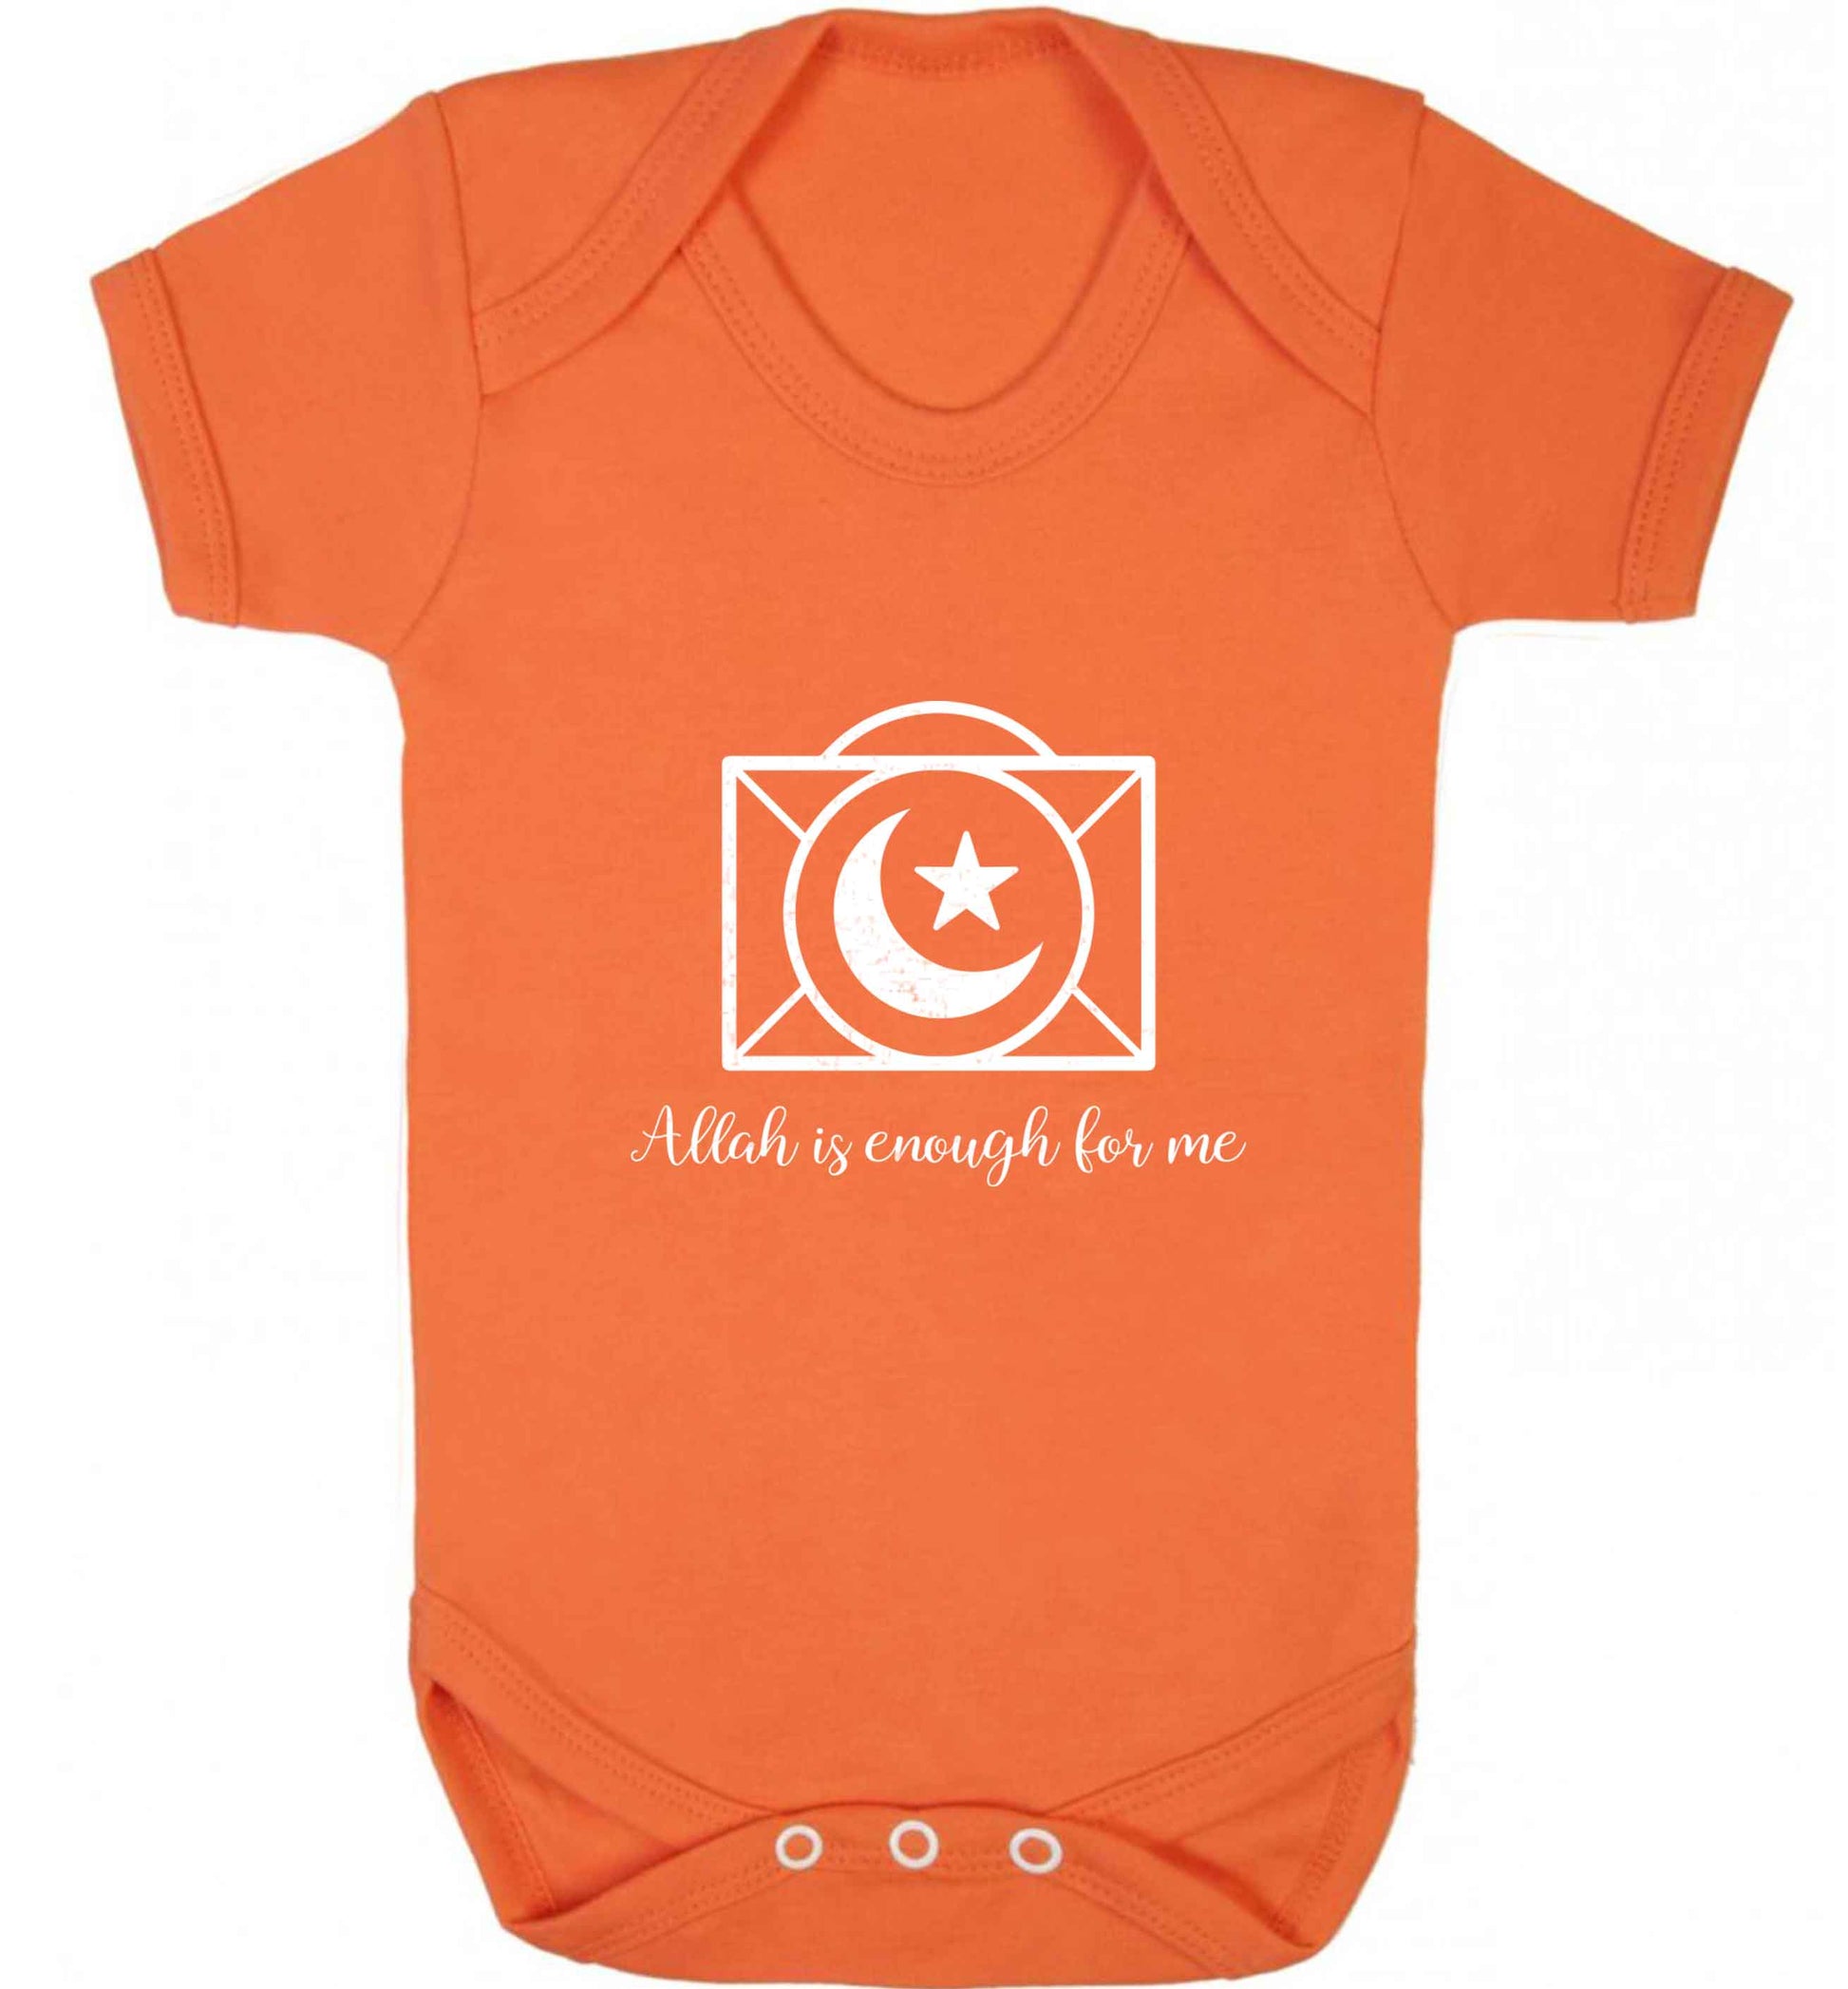 Allah is enough for me baby vest orange 18-24 months